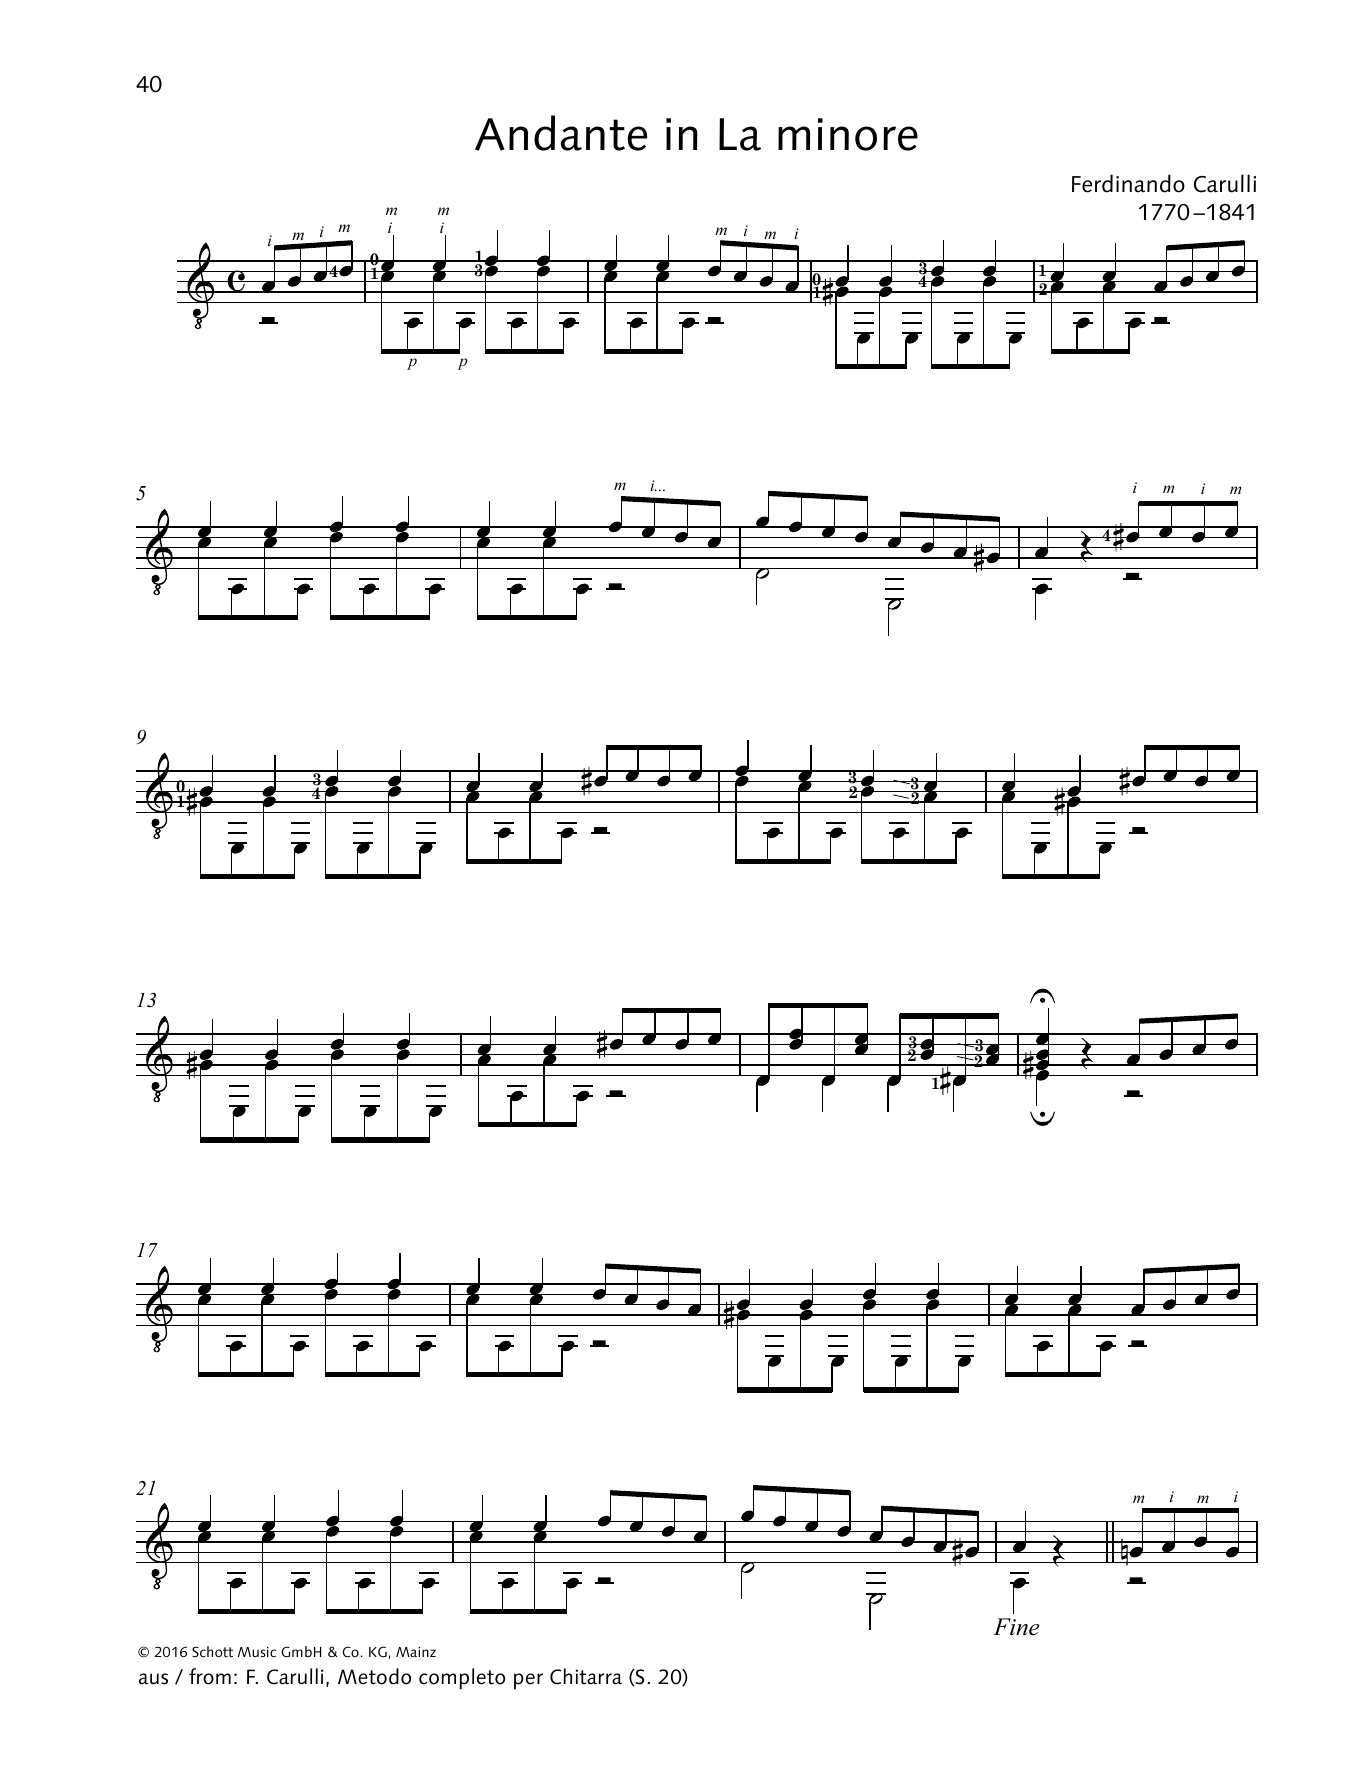 Ferdinando Carulli Andante in La minore sheet music notes and chords. Download Printable PDF.